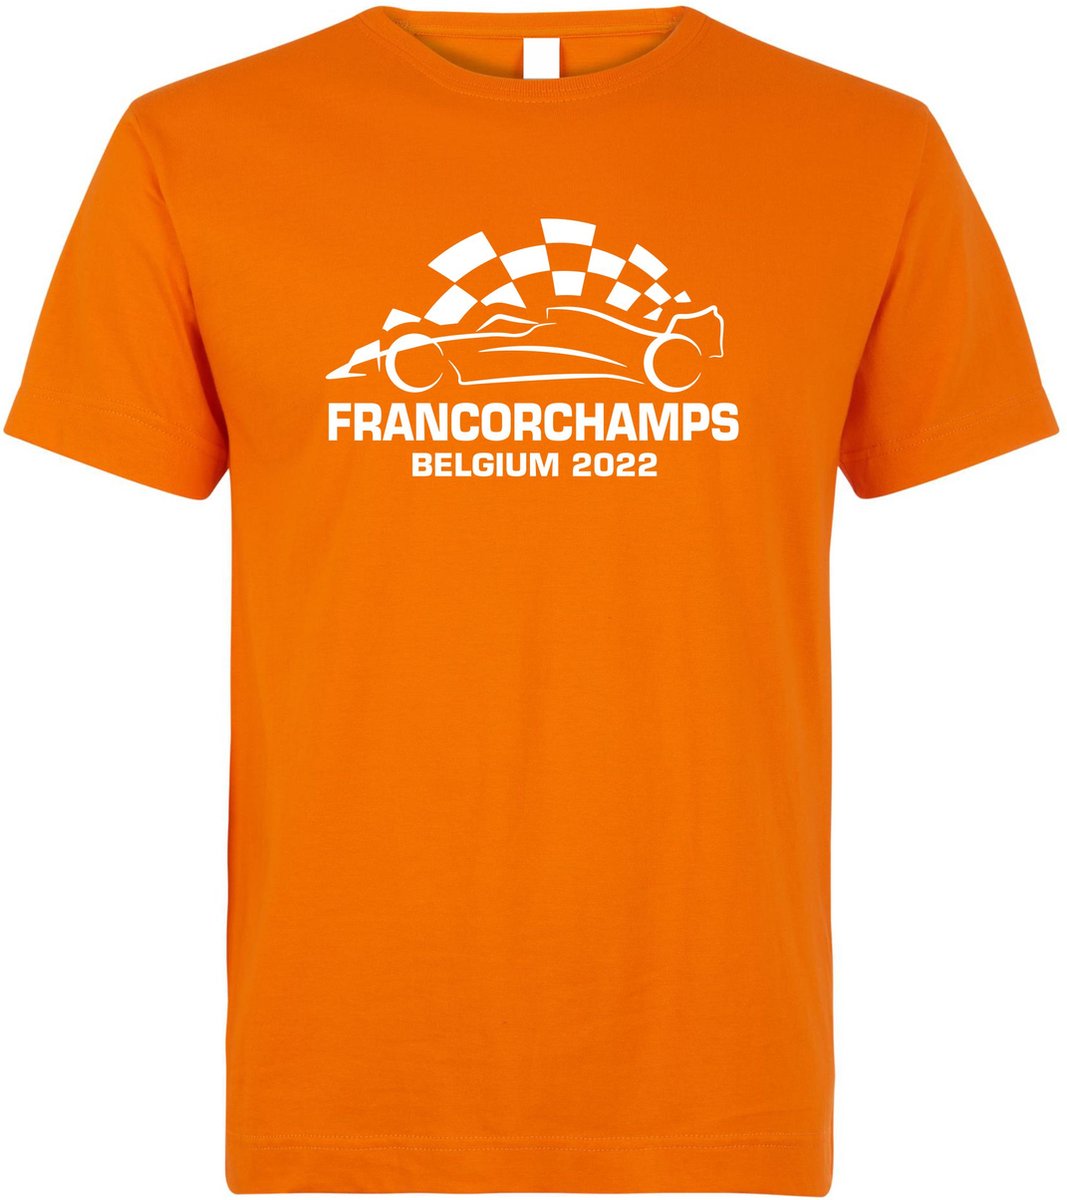 T-shirt Francorchamps Belgium 2022 met raceauto | Max Verstappen / Red Bull Racing / Formule 1 fan | Grand Prix Circuit Spa-Francorchamps | kleding shirt | Oranje | maat S